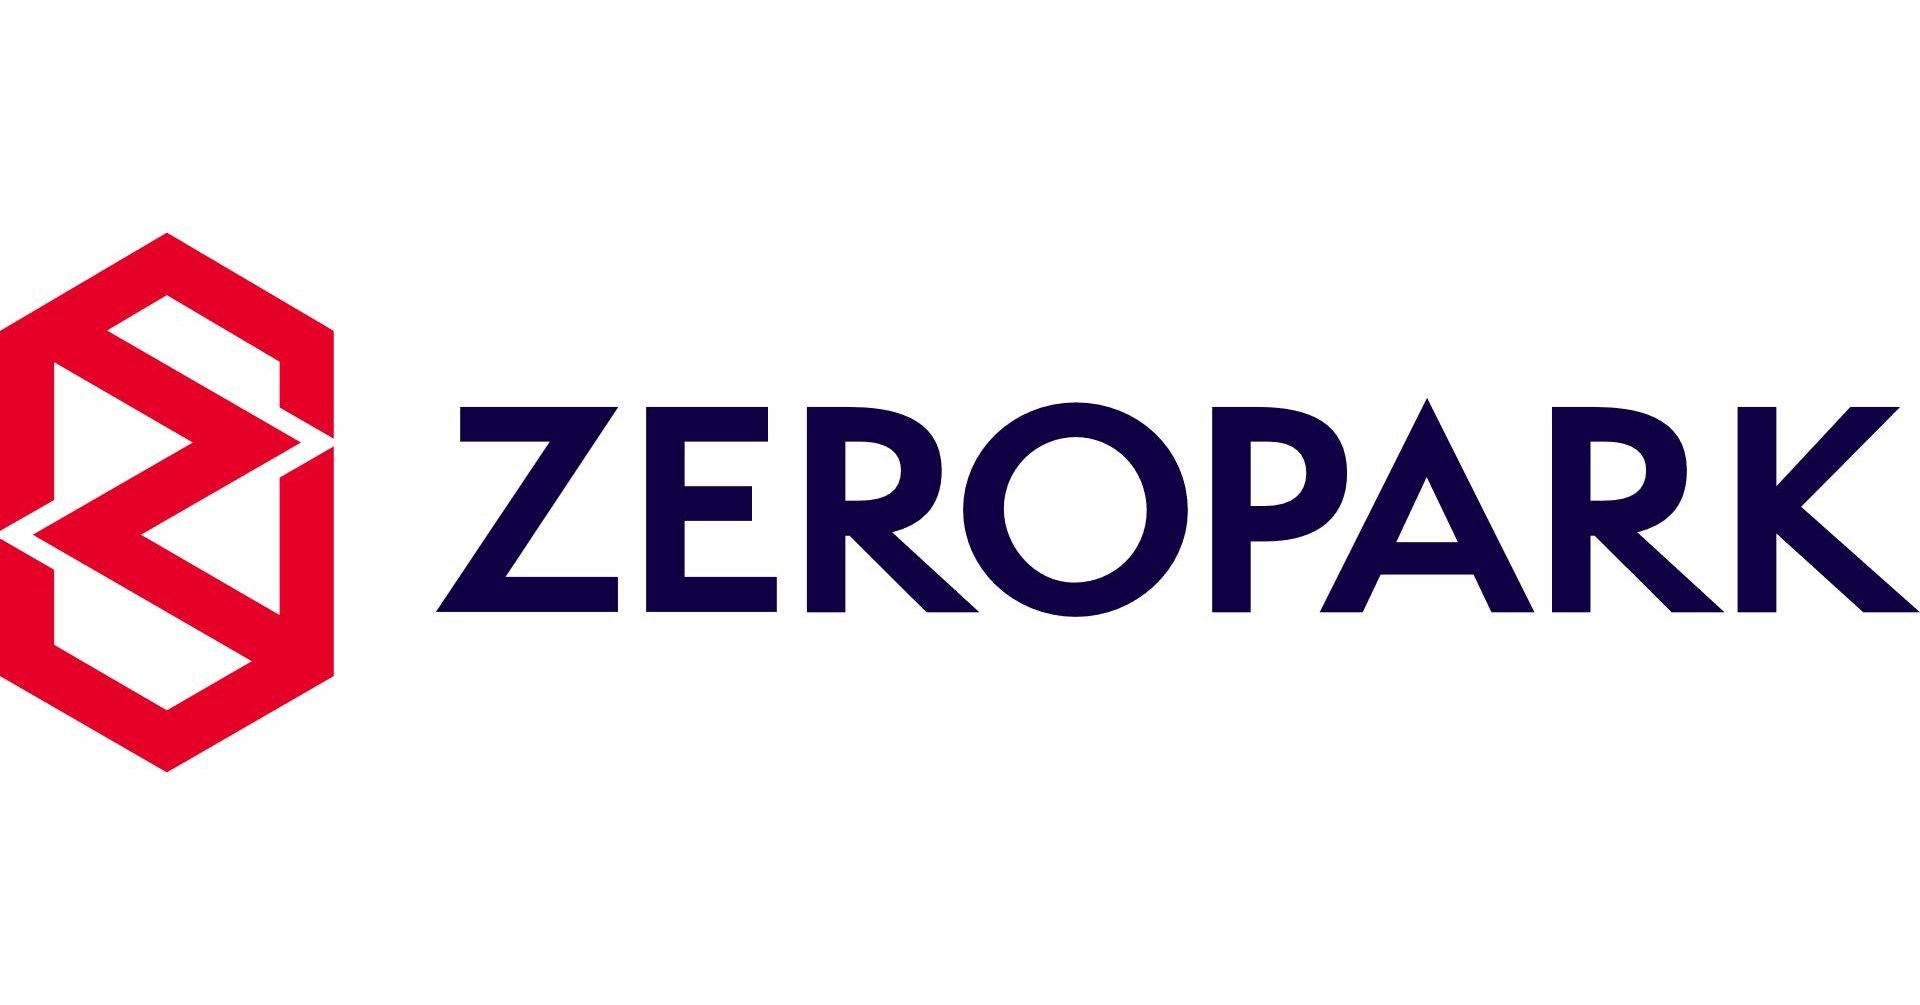 zeropark_logo.jpg